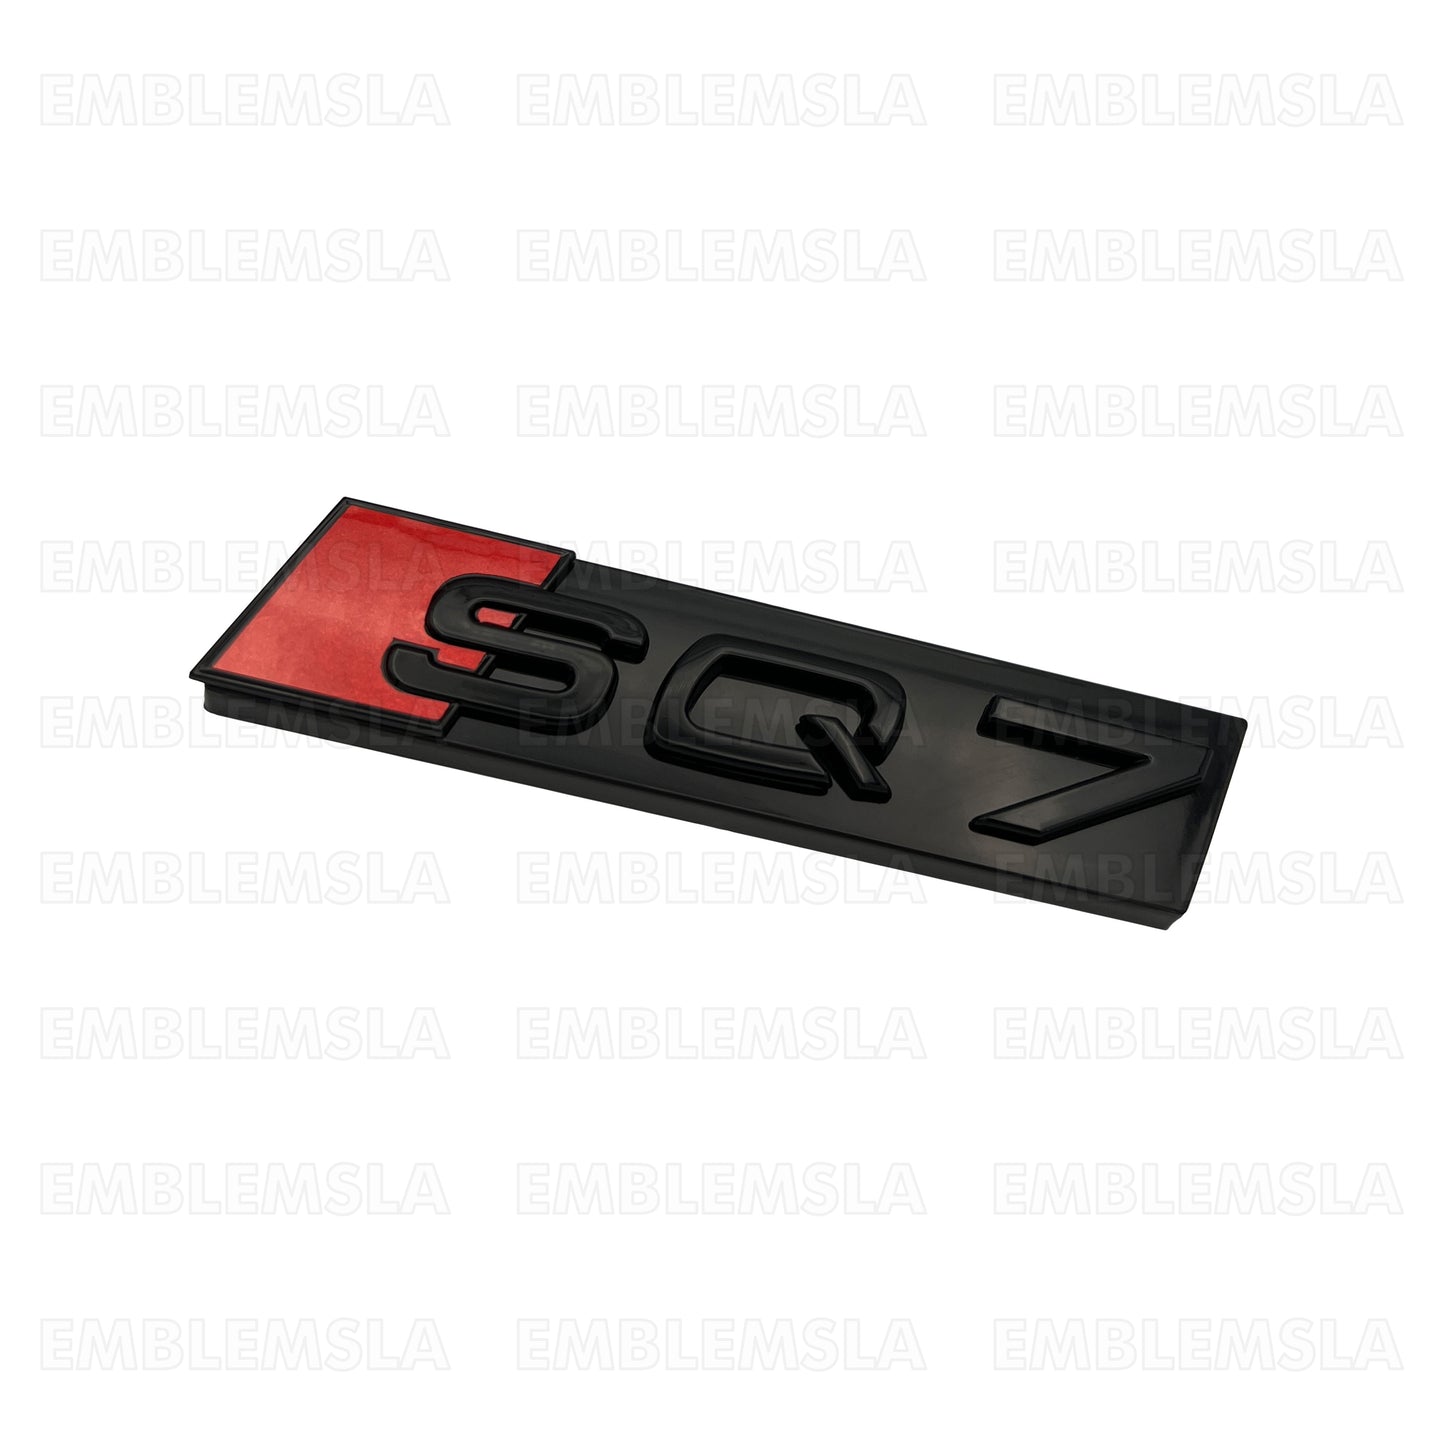 Audi SQ7 Front Grille Emblem Gloss Black fit SQ7 Q7 Hood Grill Badge Nameplate